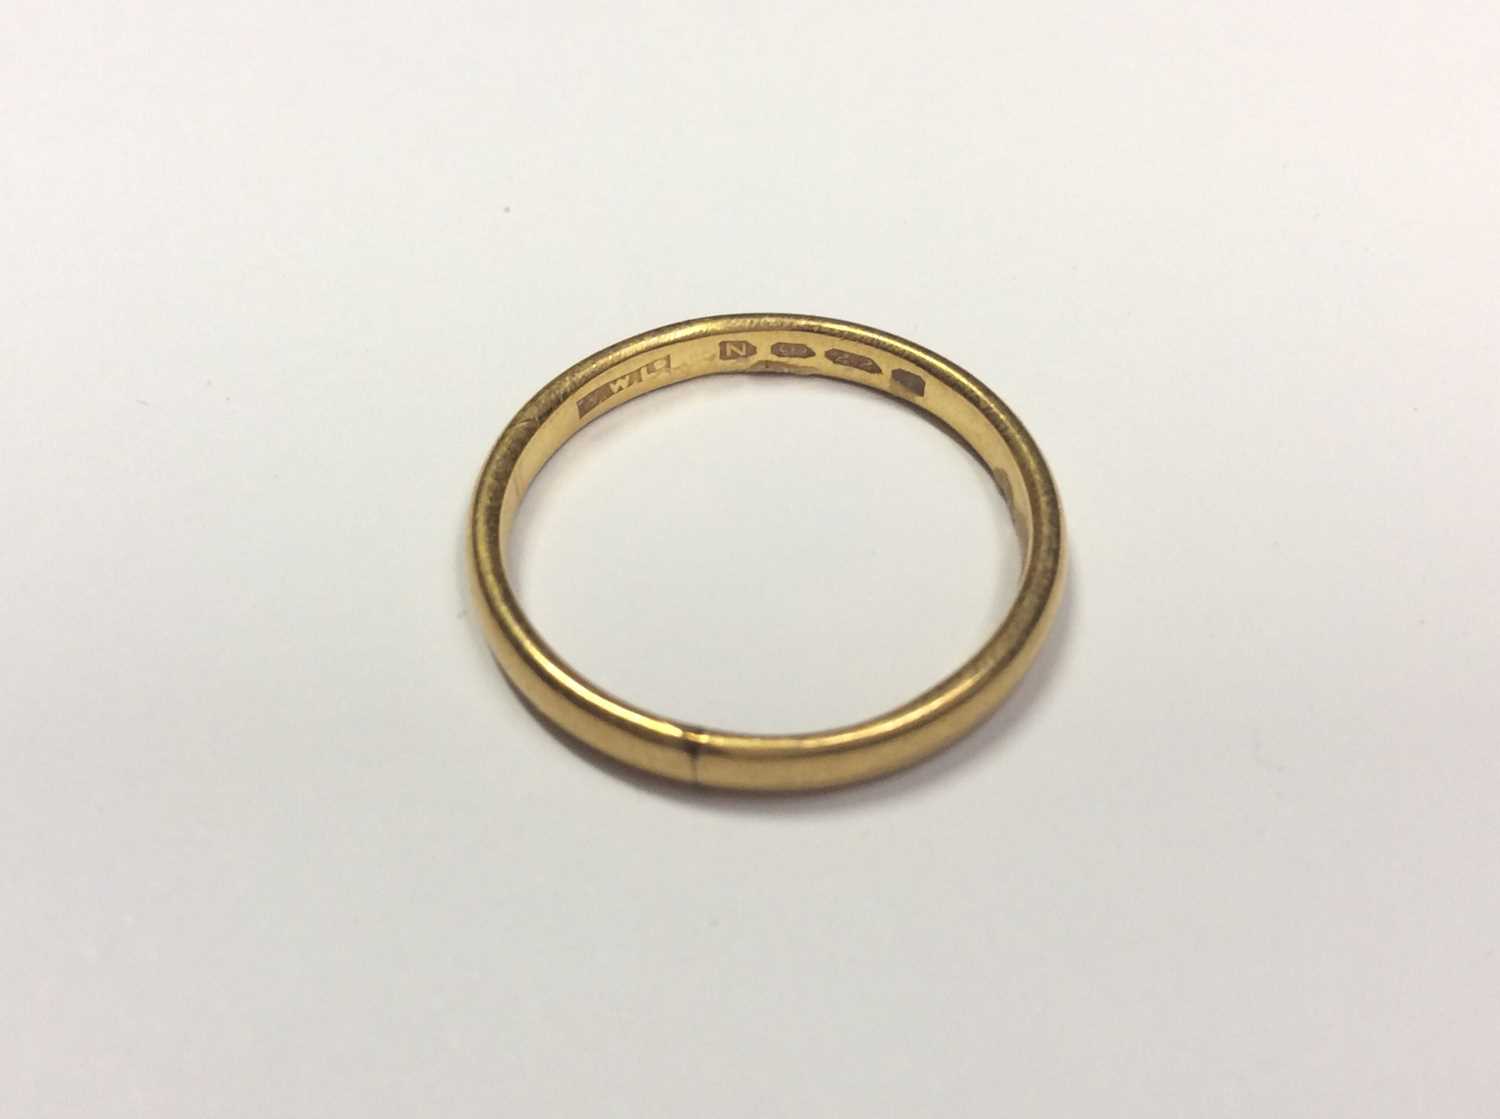 Lot 501 - 22ct gold wedding ring. Size Q